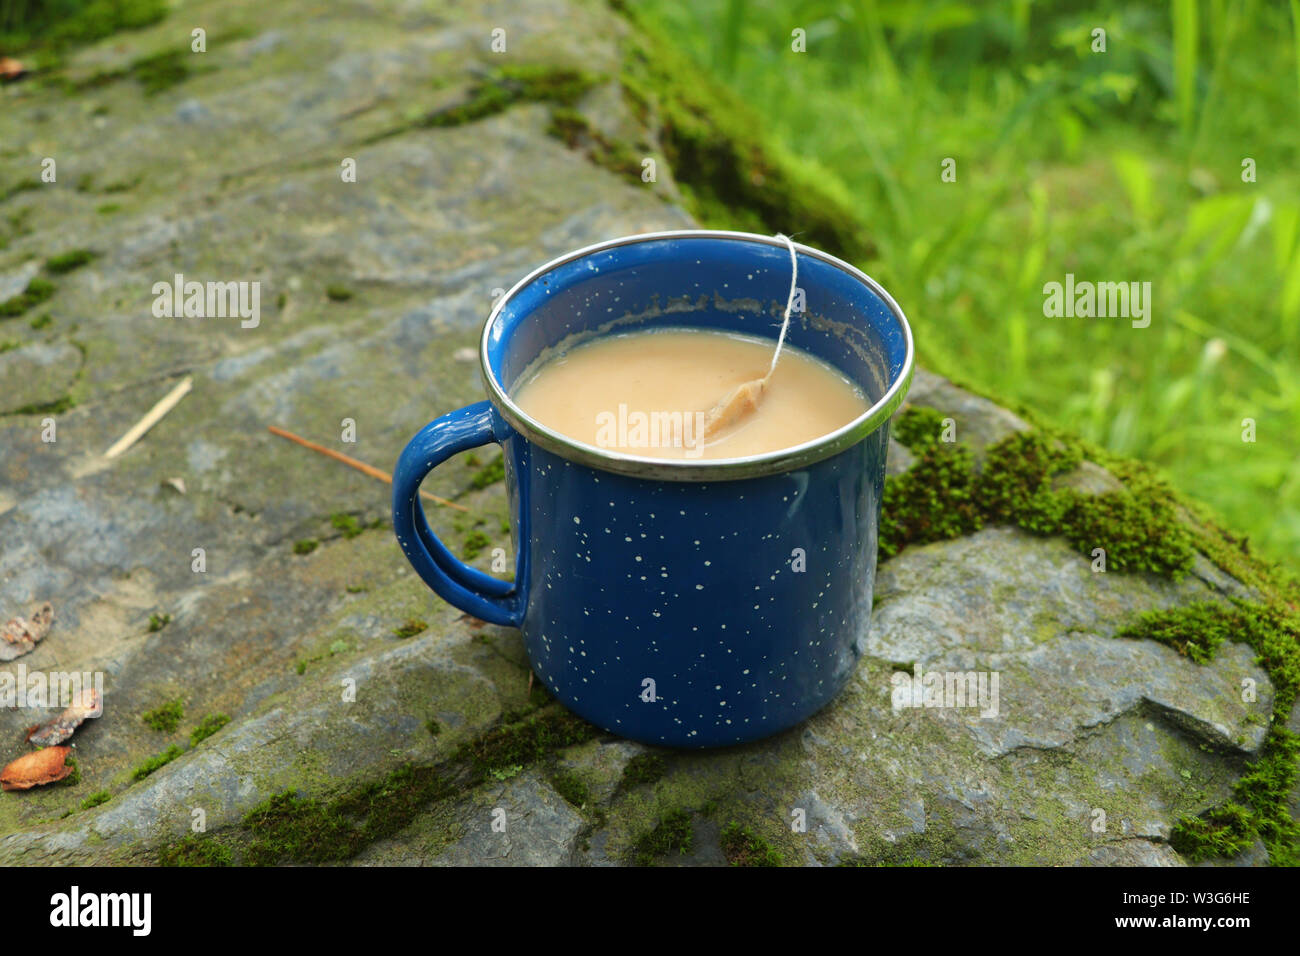 Tea Latte Chai London Fog in a Enamel Mug on a rock, Outdoors, Camping, Picnic Stock Photo